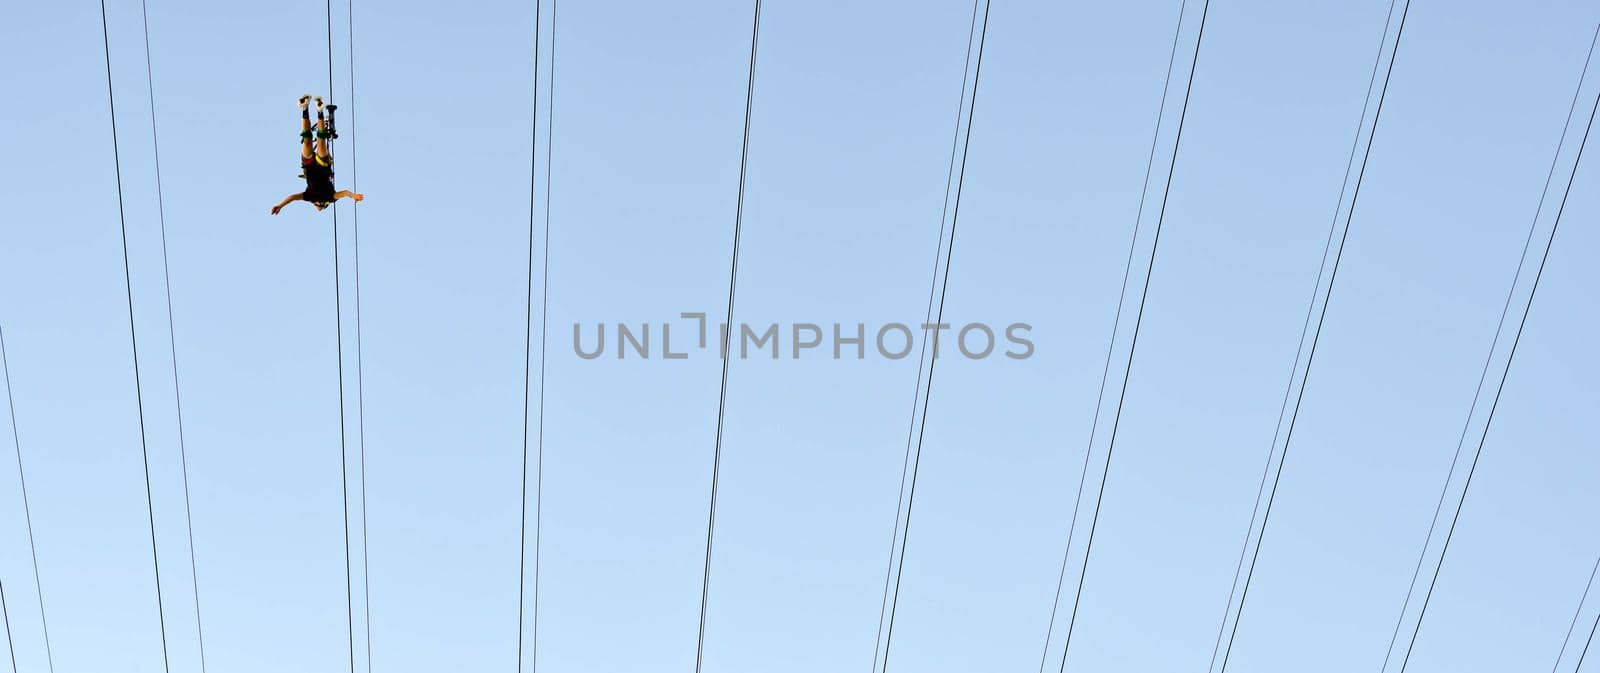 Tourist enjoying the FlyLinq Zipline at Las Vegas Strip, Las Vegas Nevada USA, March 30, 2020